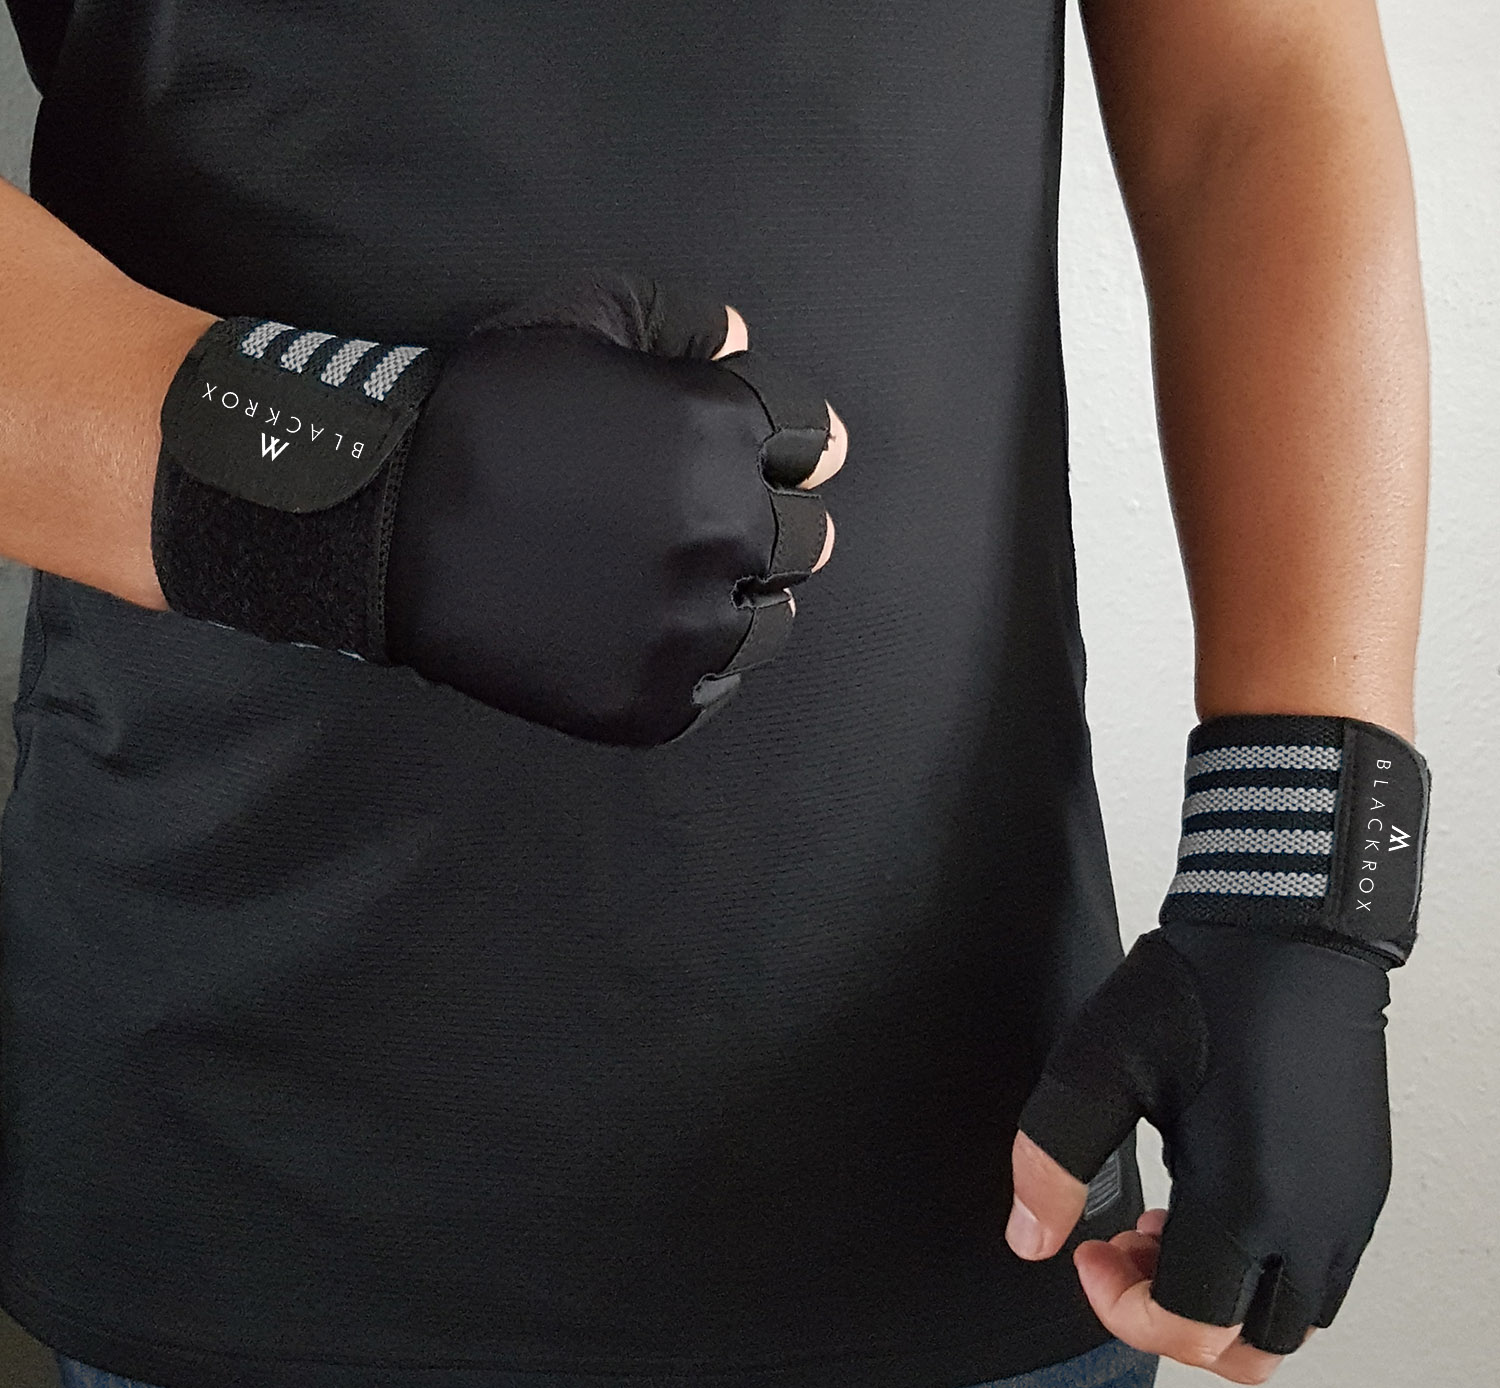 Luwu-Store 1Pair Sport Handschuhe Fitness Trainings Gymnastik Handschuhe Black M 